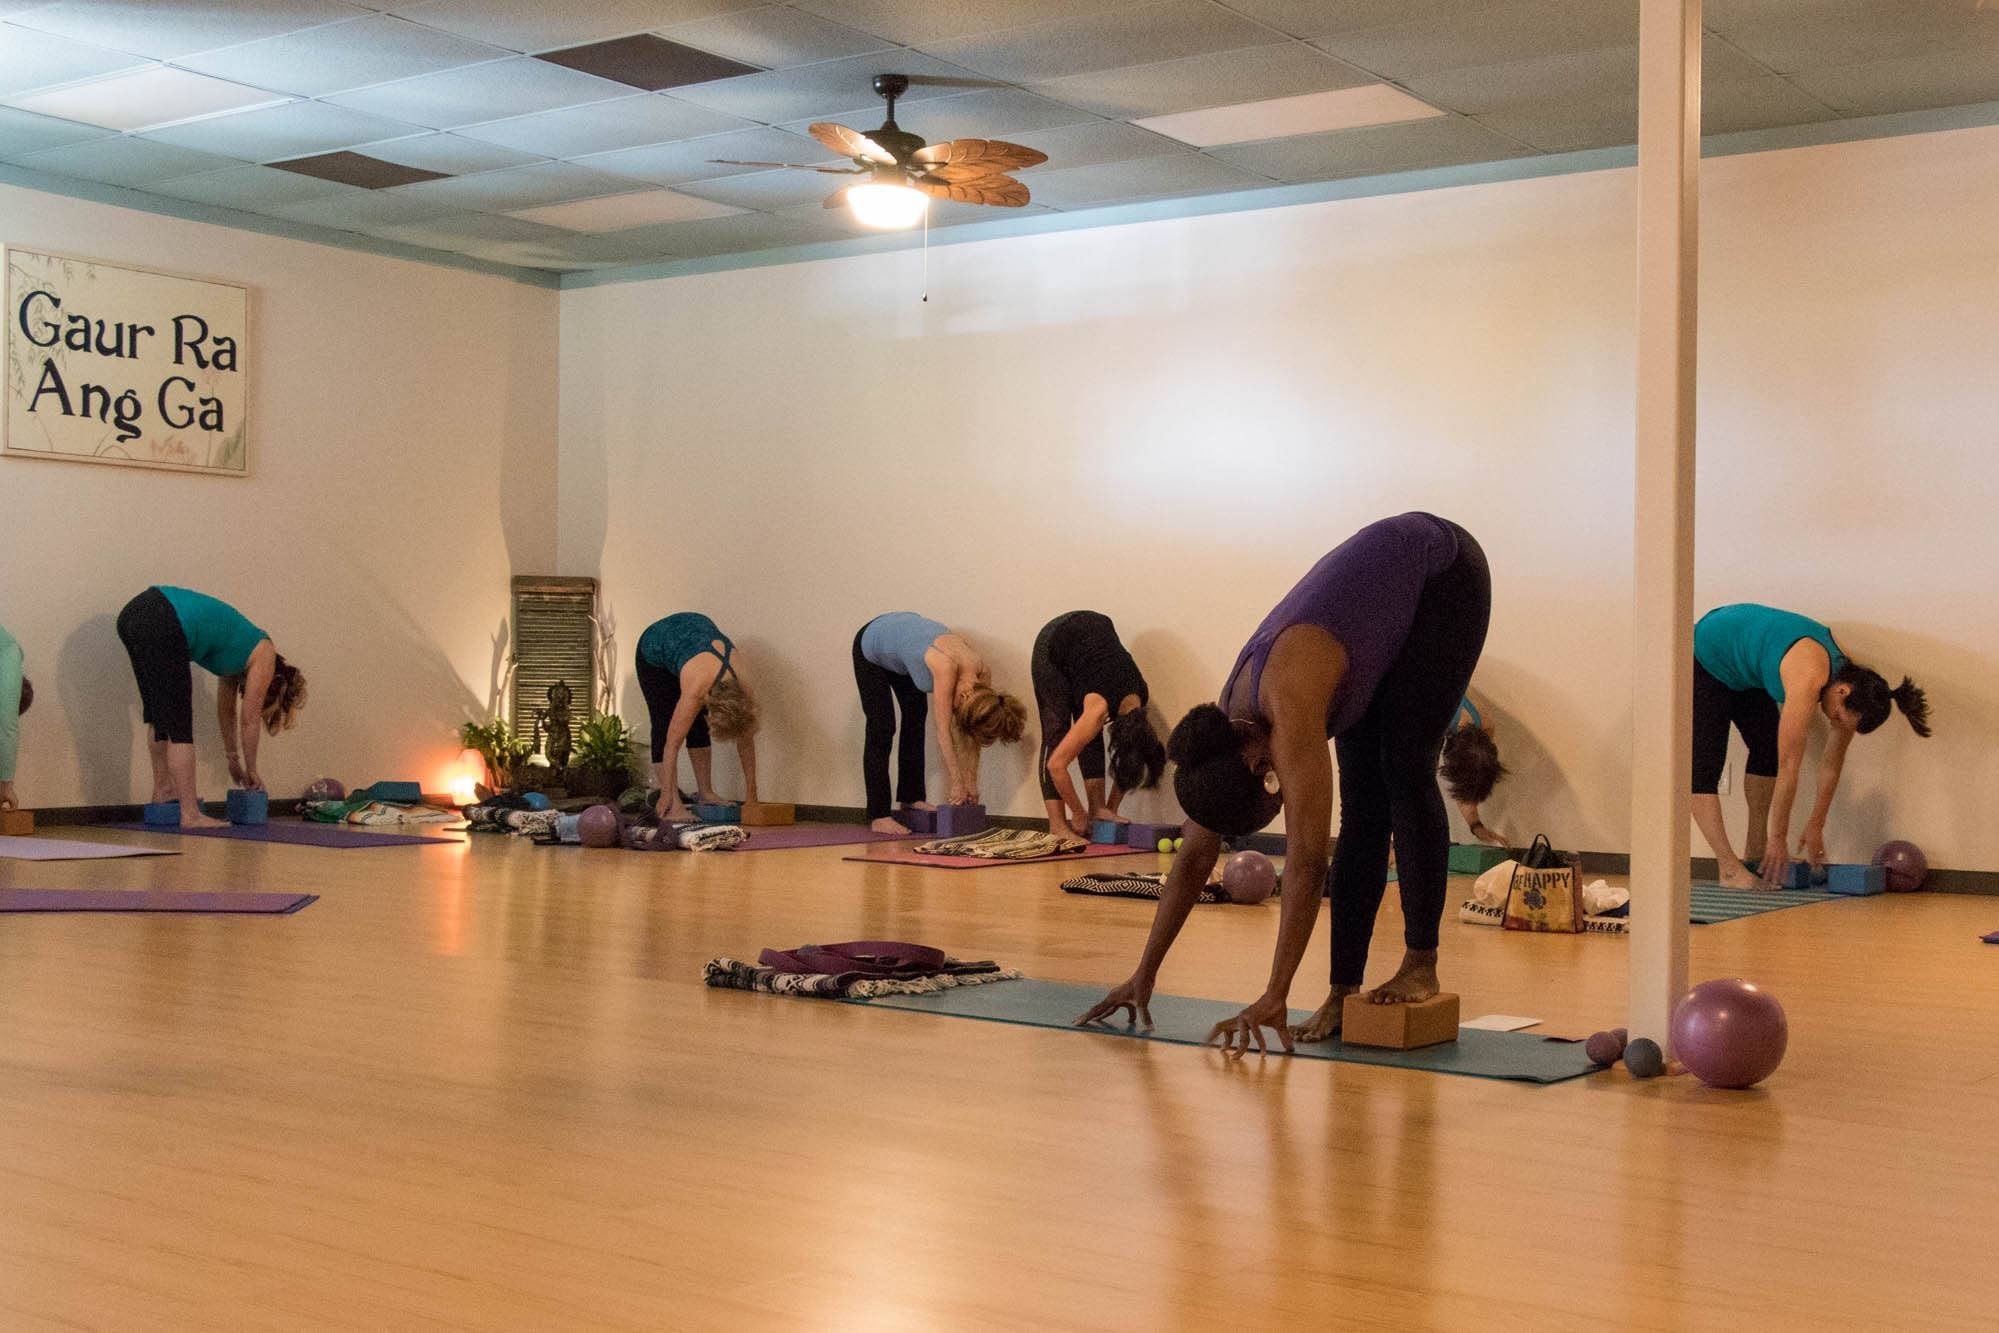 Lotus Garden Meditation Center & Yoga Studio: Read Reviews and Book ...